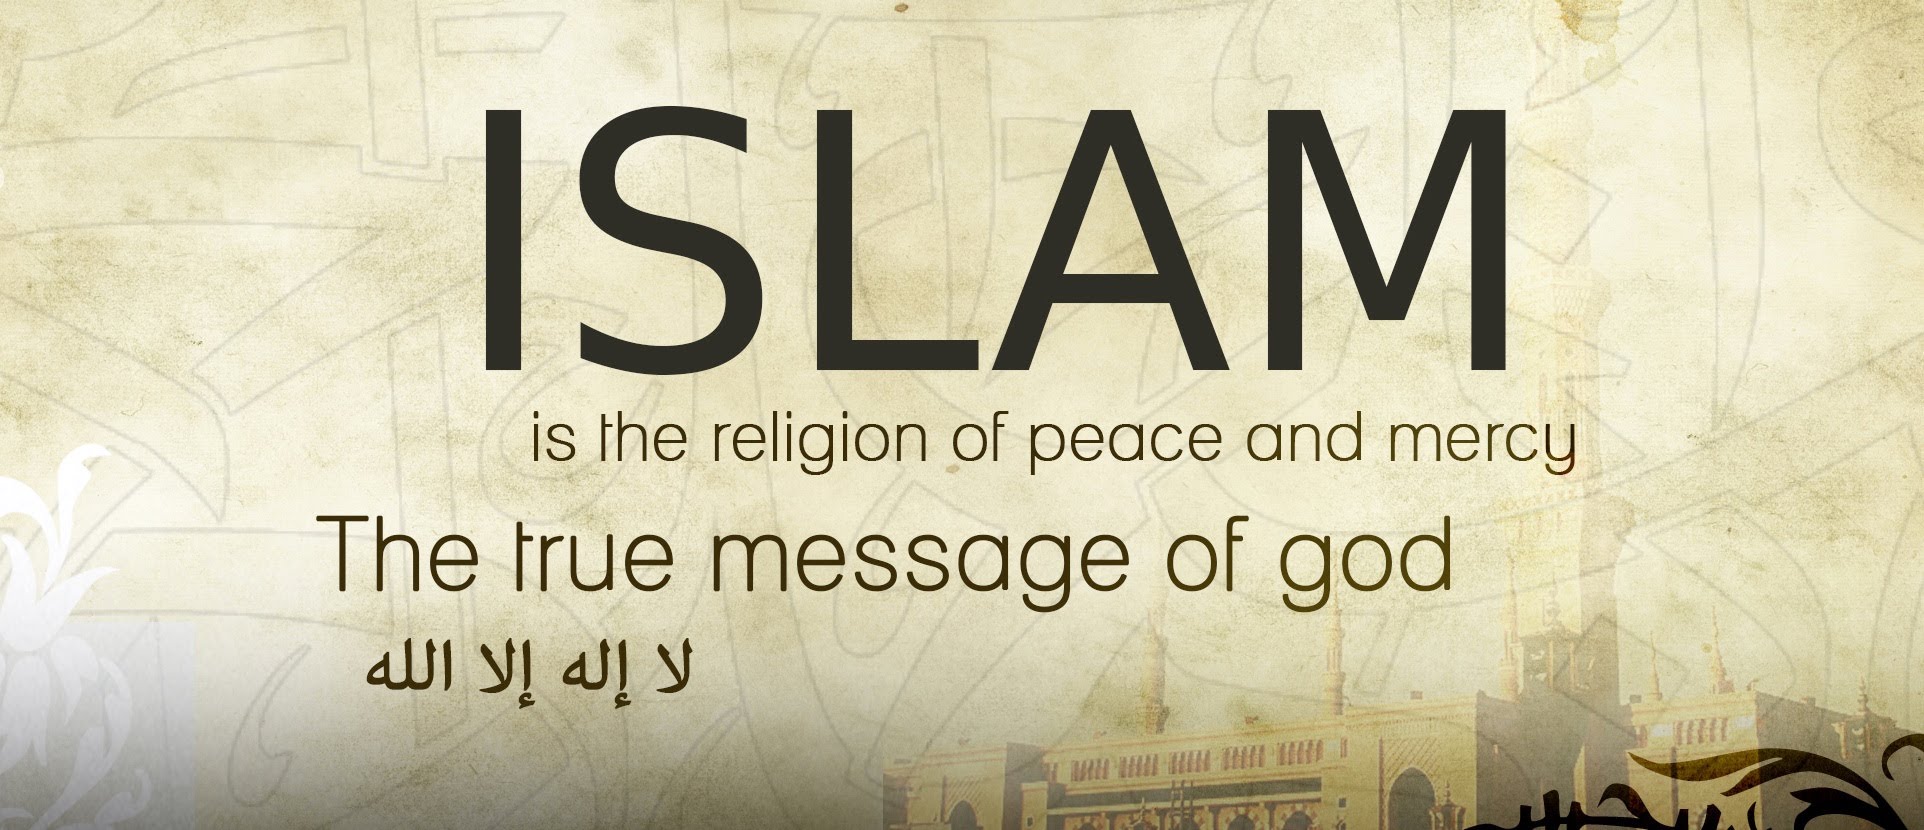 Basic Islamic Beliefs | Islamic Supreme Council of Canada